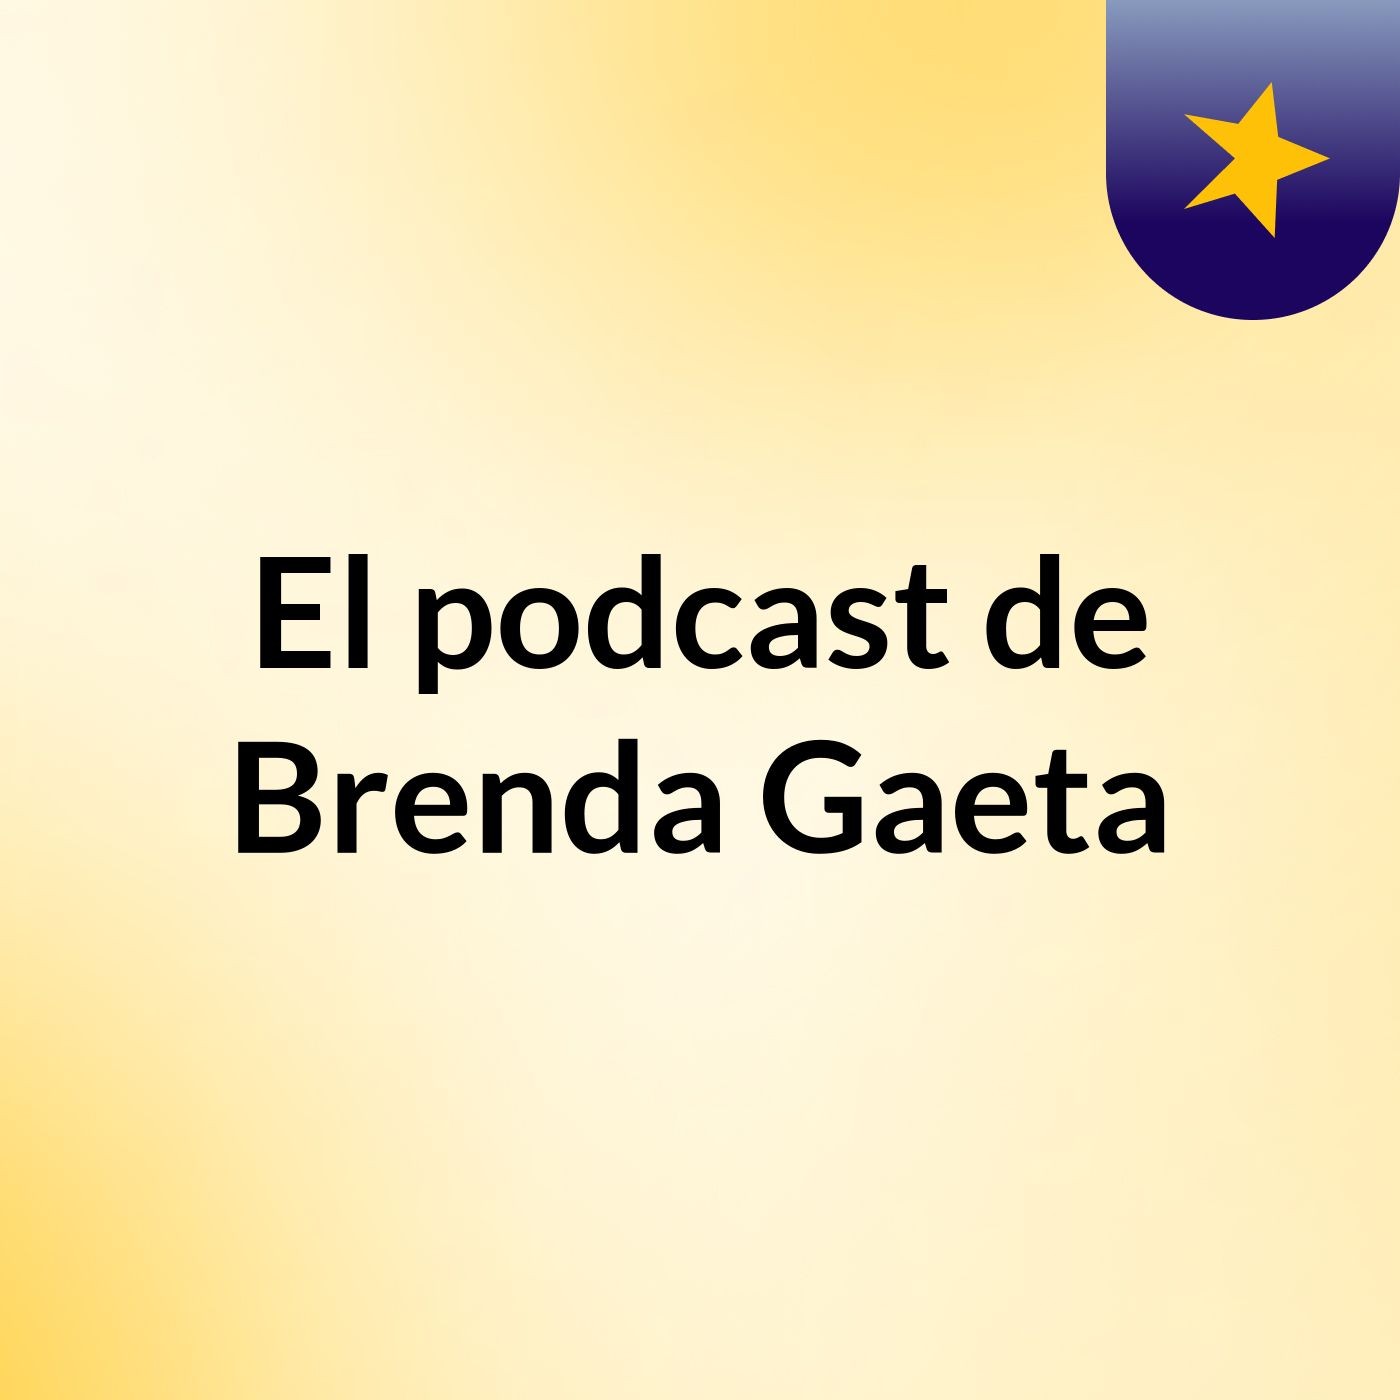 El podcast de Brenda Gaeta